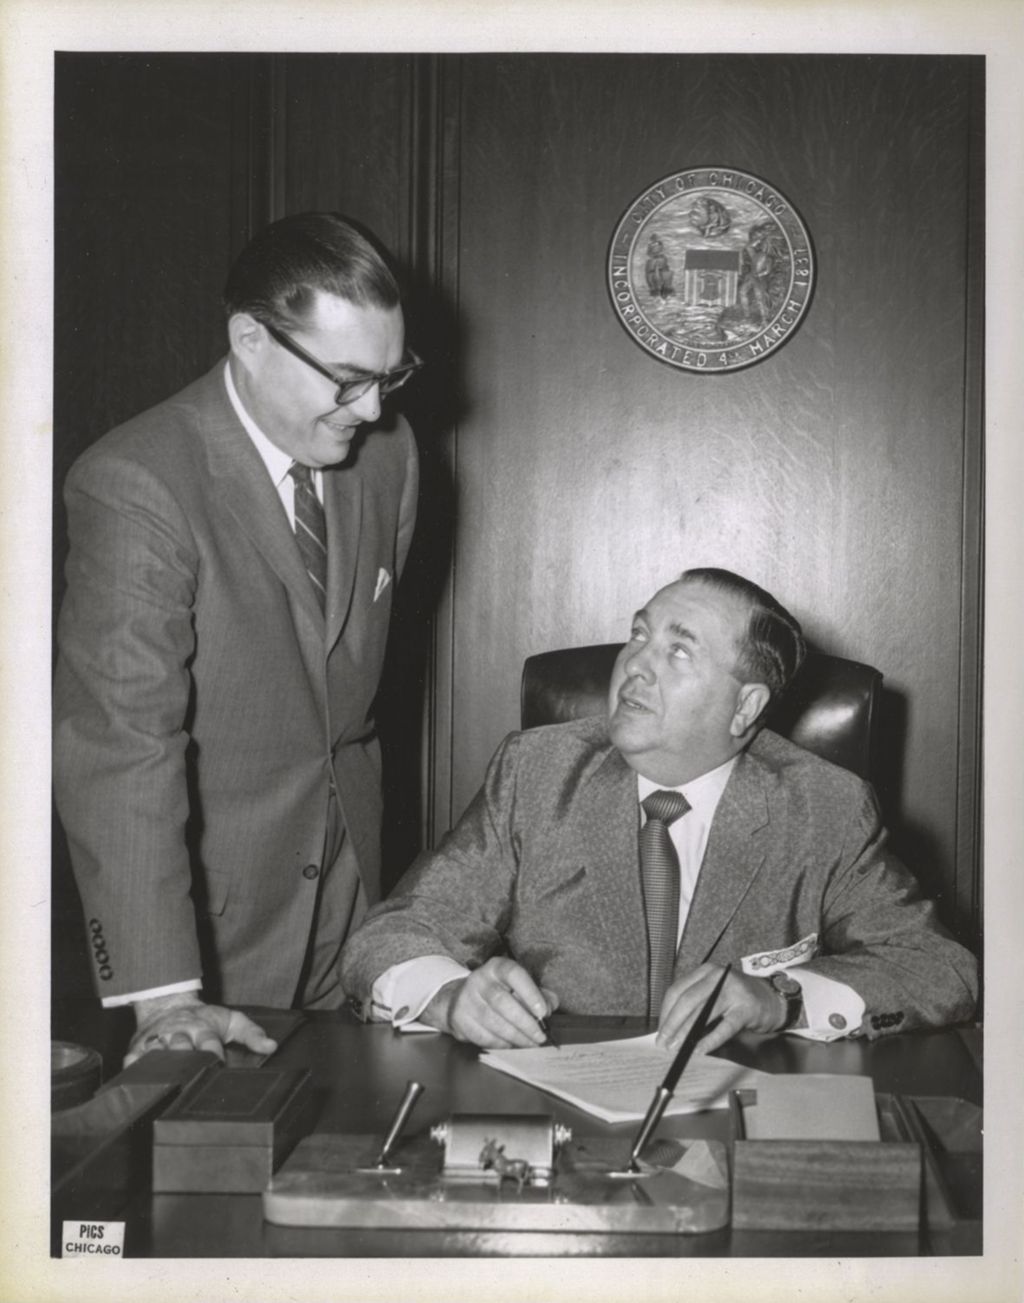 Sheriff Joseph Lohman (?) with Richard J. Daley at his desk